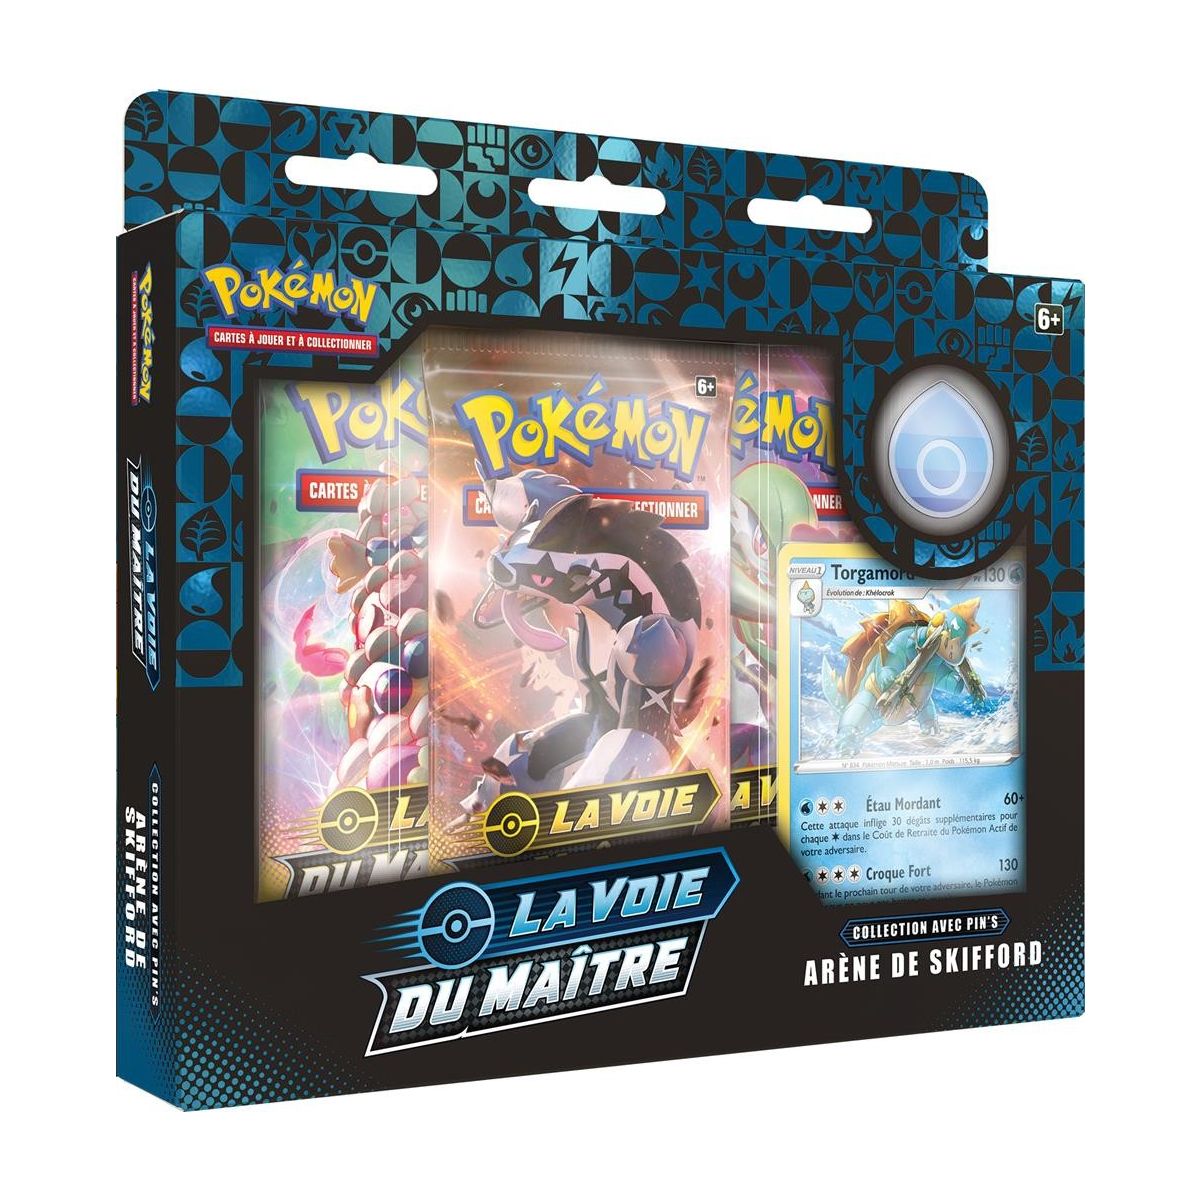 Pokémon - Pin's Box - Skifford Arena - The Master's Way [EB3.5] - FR